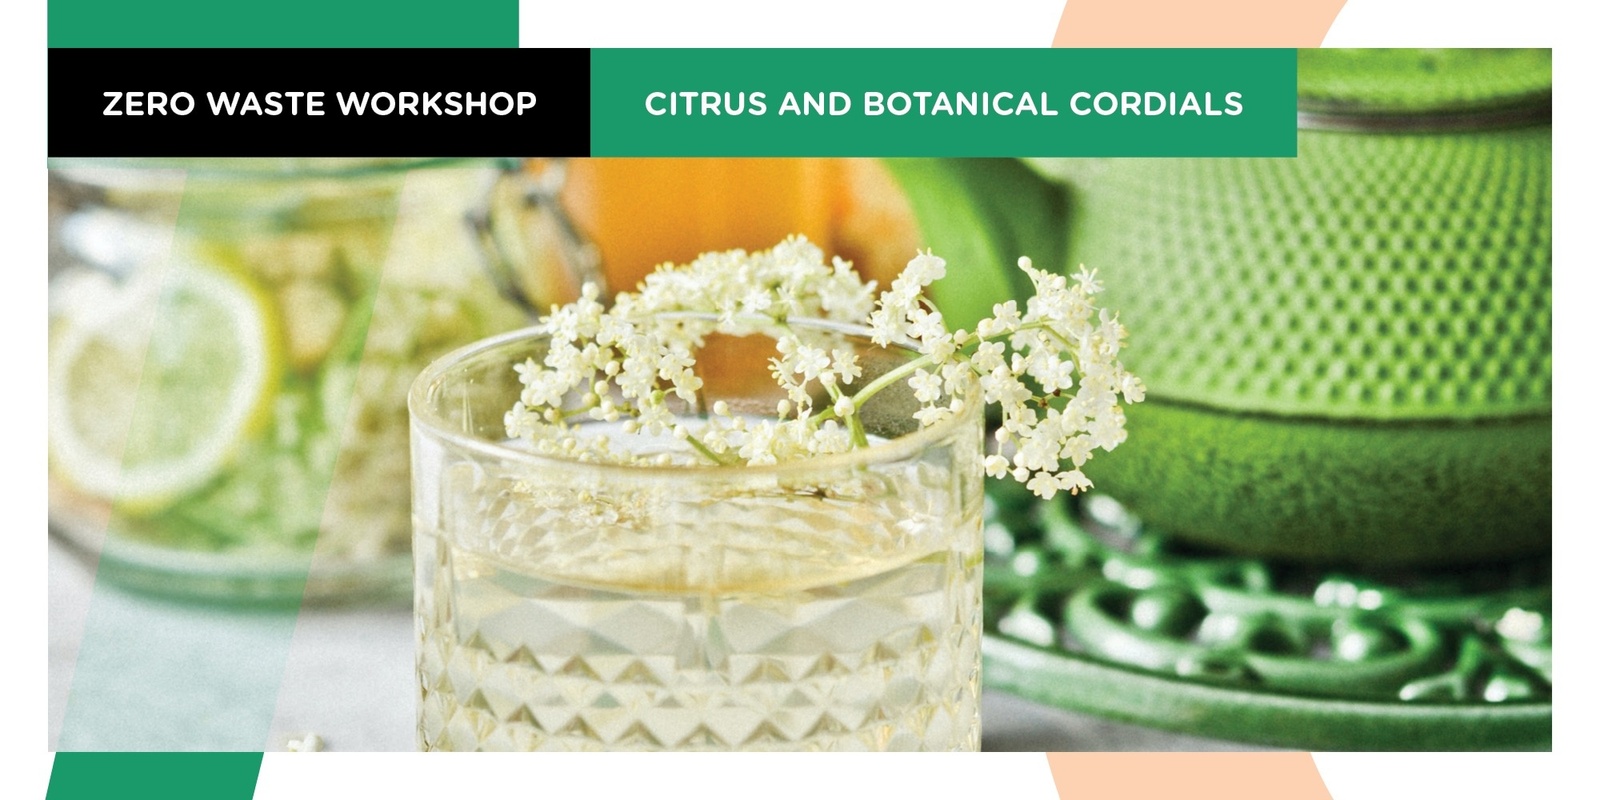 Citrus and Botanical Cordials - A Zero Waste Workshop with Araluen Hagan